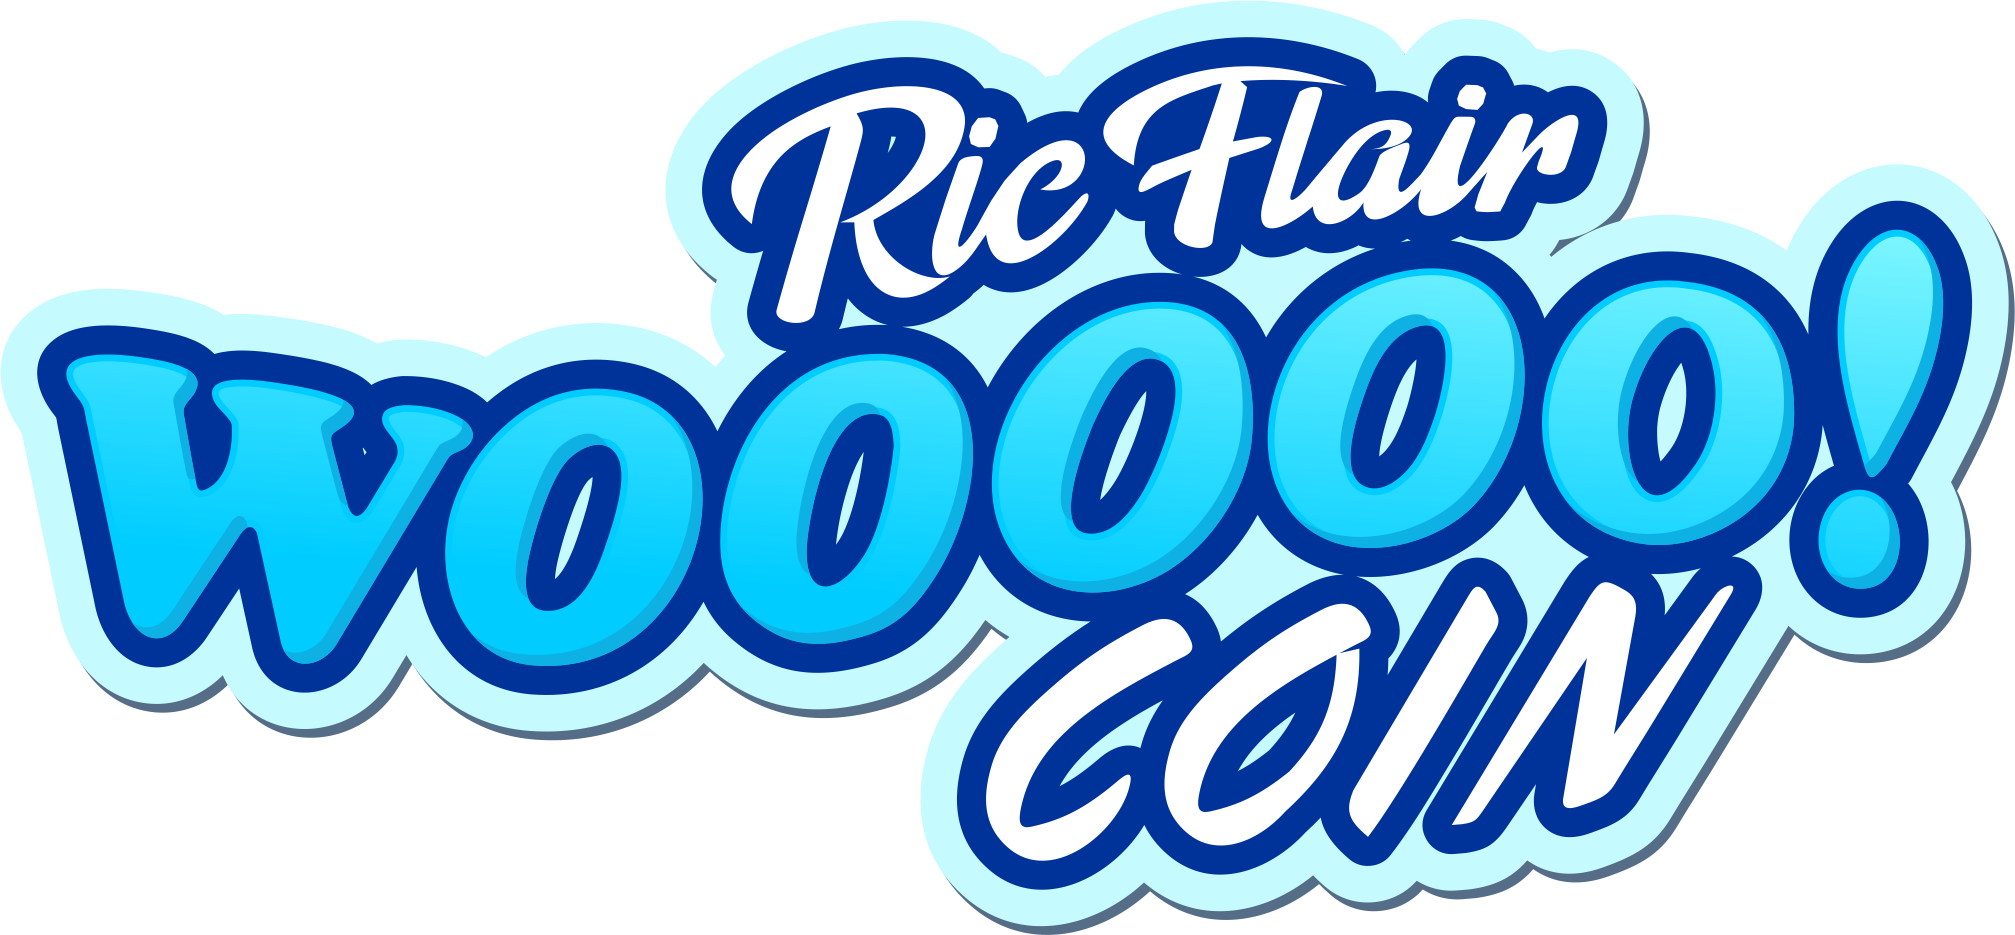 Ric Flair's Official  Wooooo Coin image